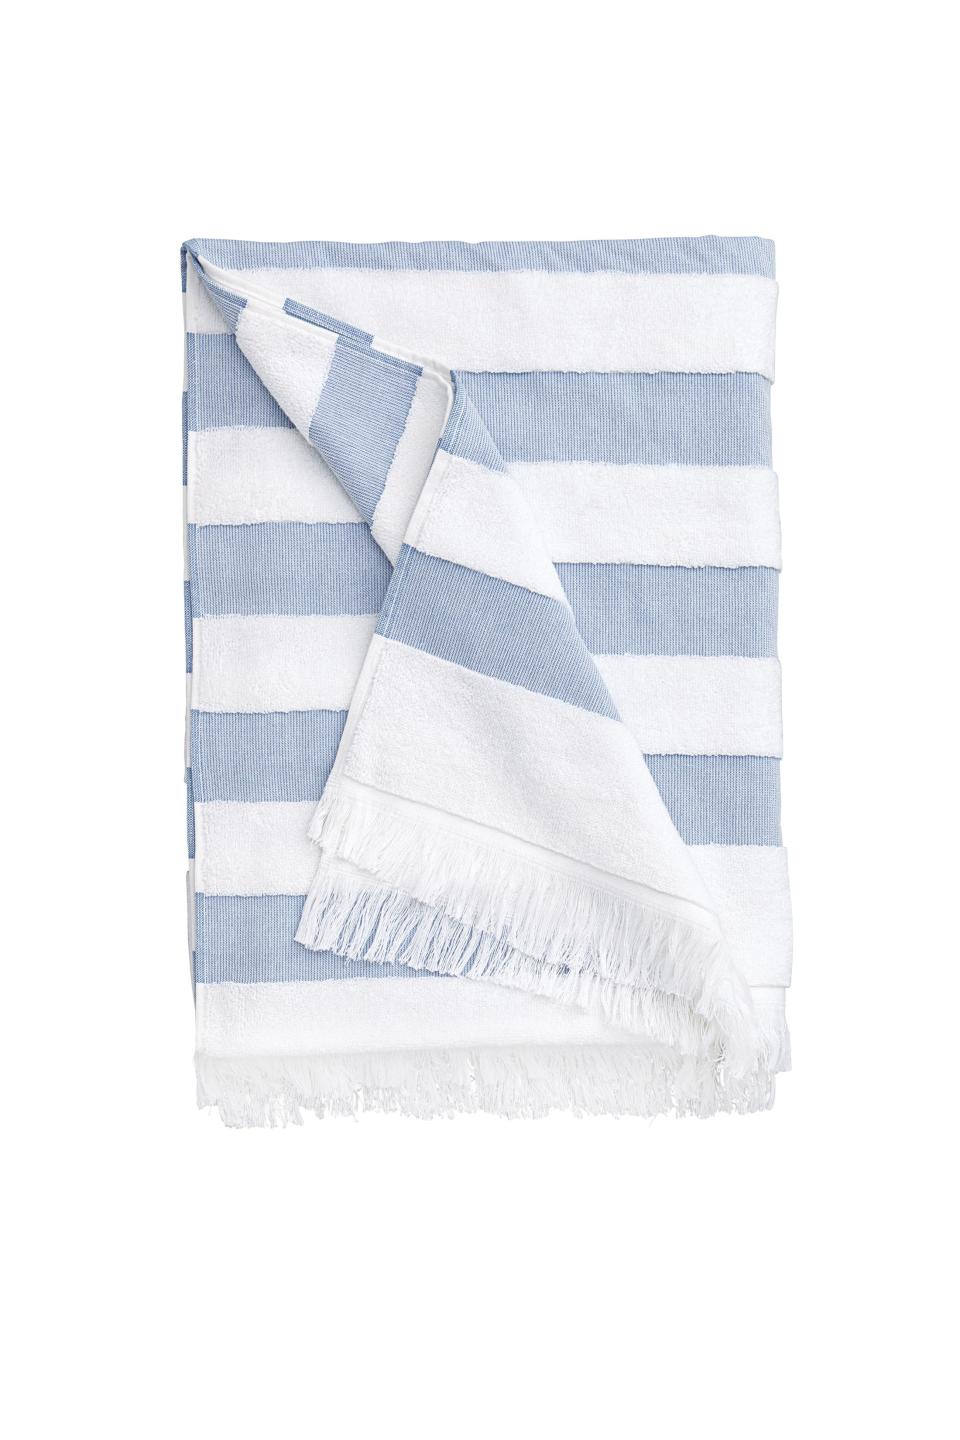 Amado beach towel and blanket; $65. matouk.com